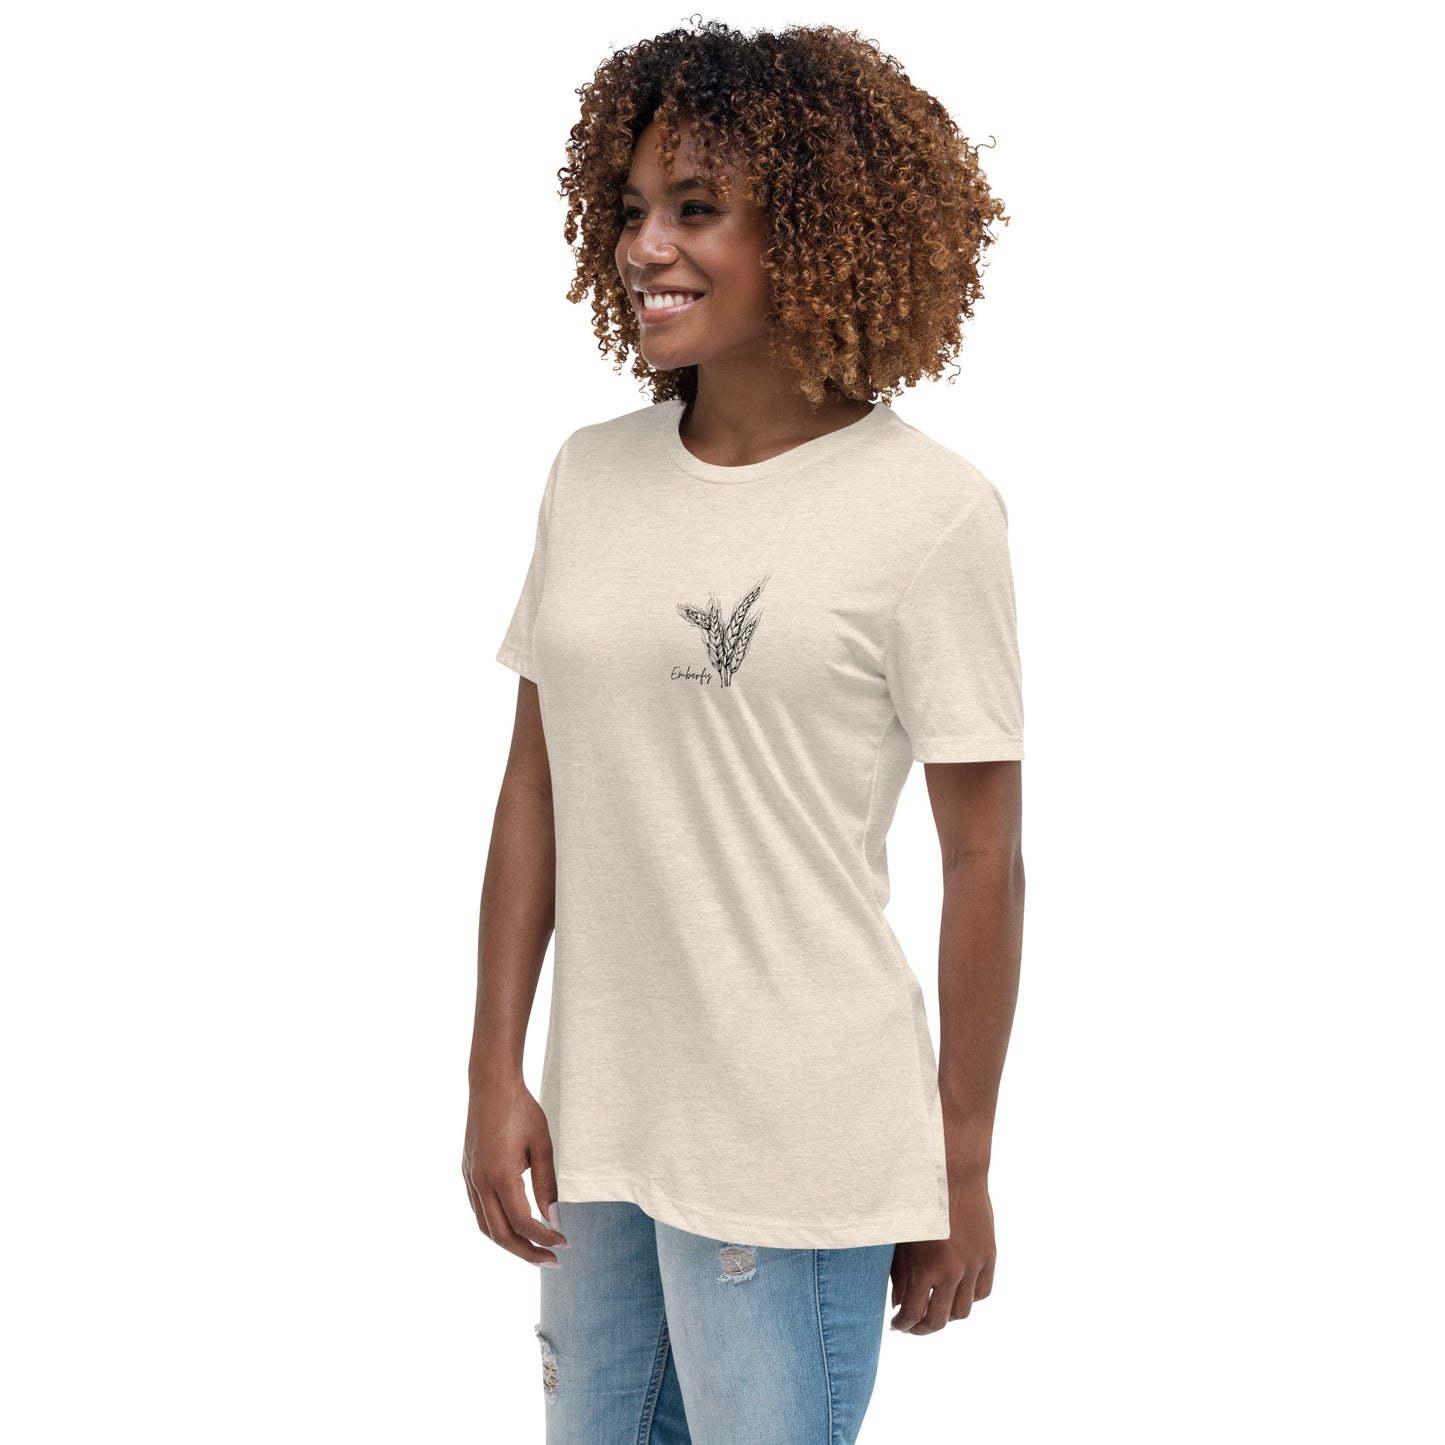 Emberfy Wheat Women's Relaxed T-Shirt